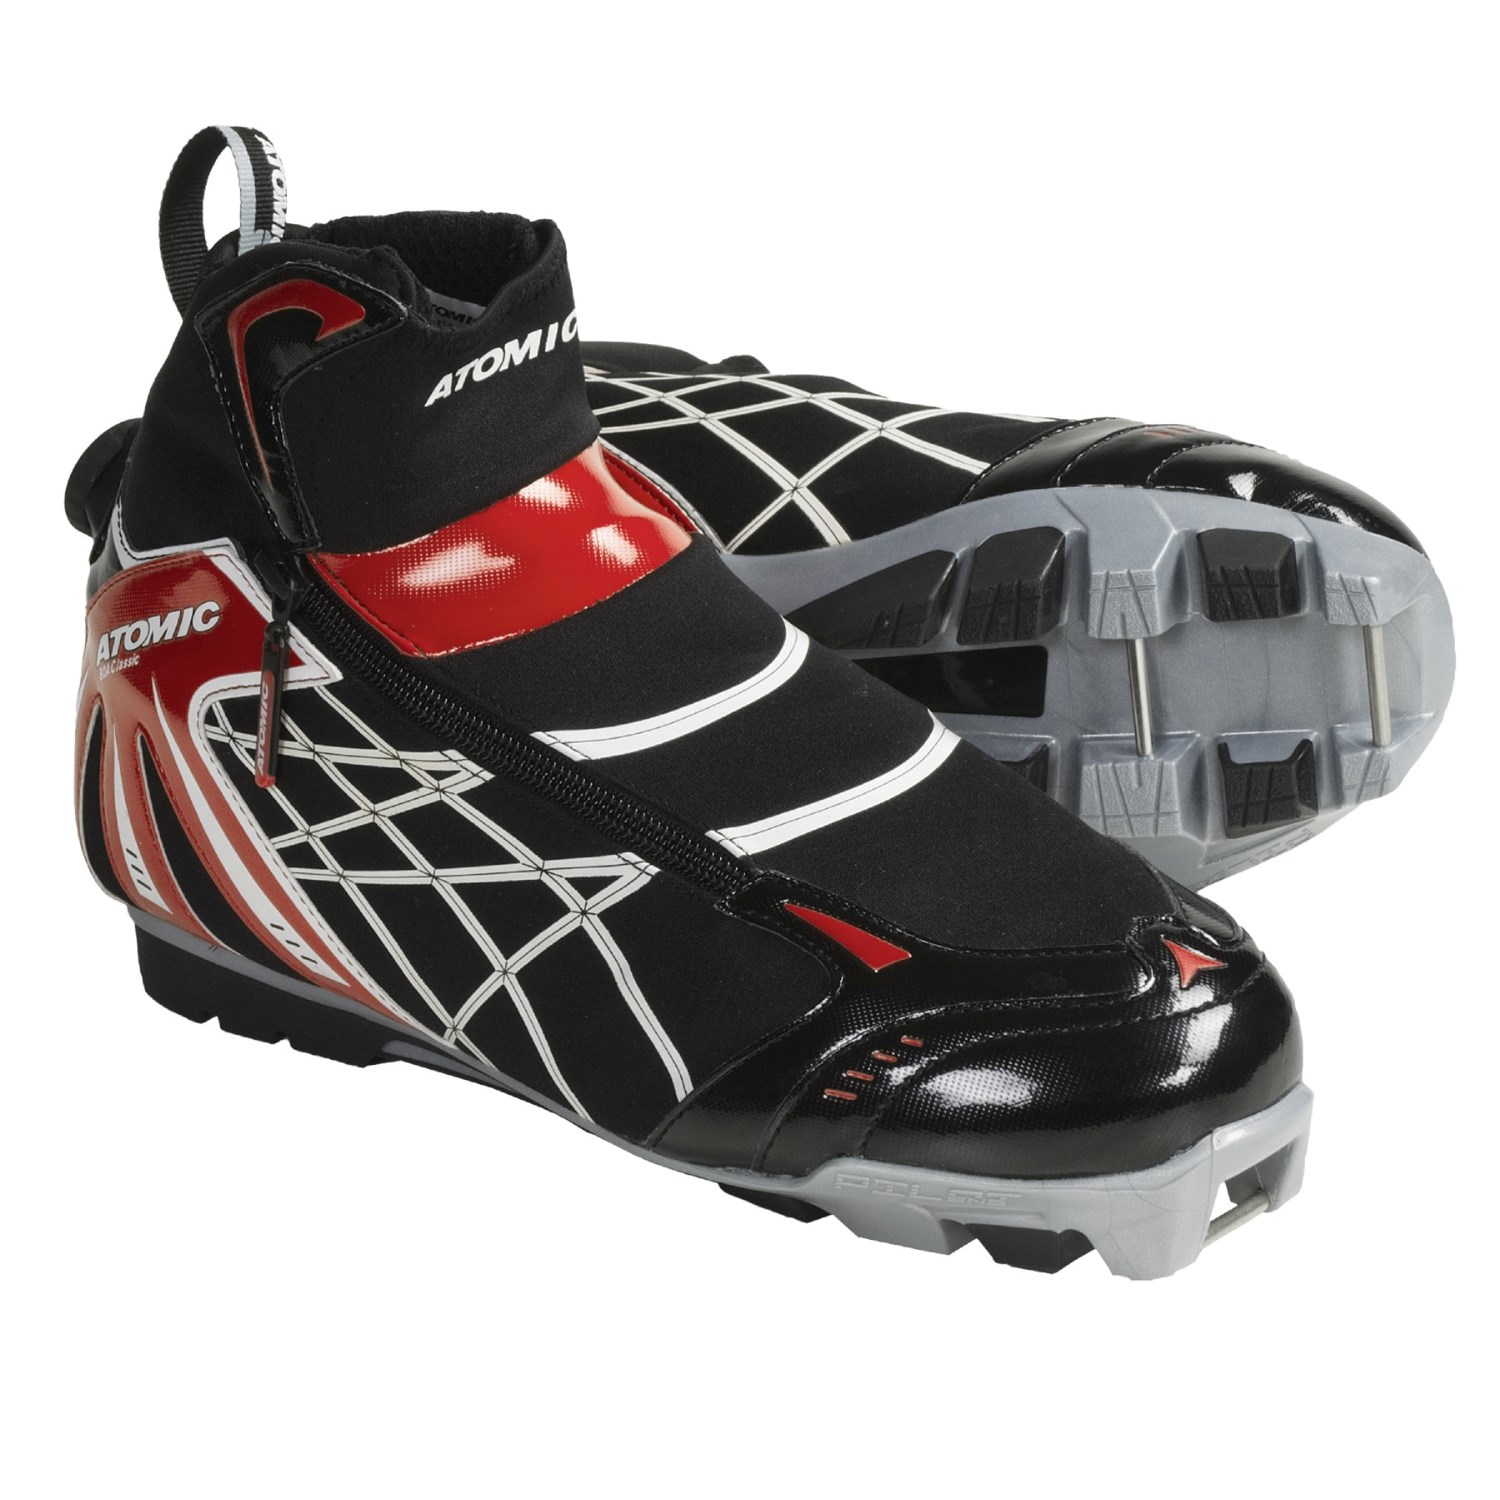 Atomic BOA Classic Nordic Ski Boots (For Men) 3614W - Save 60%